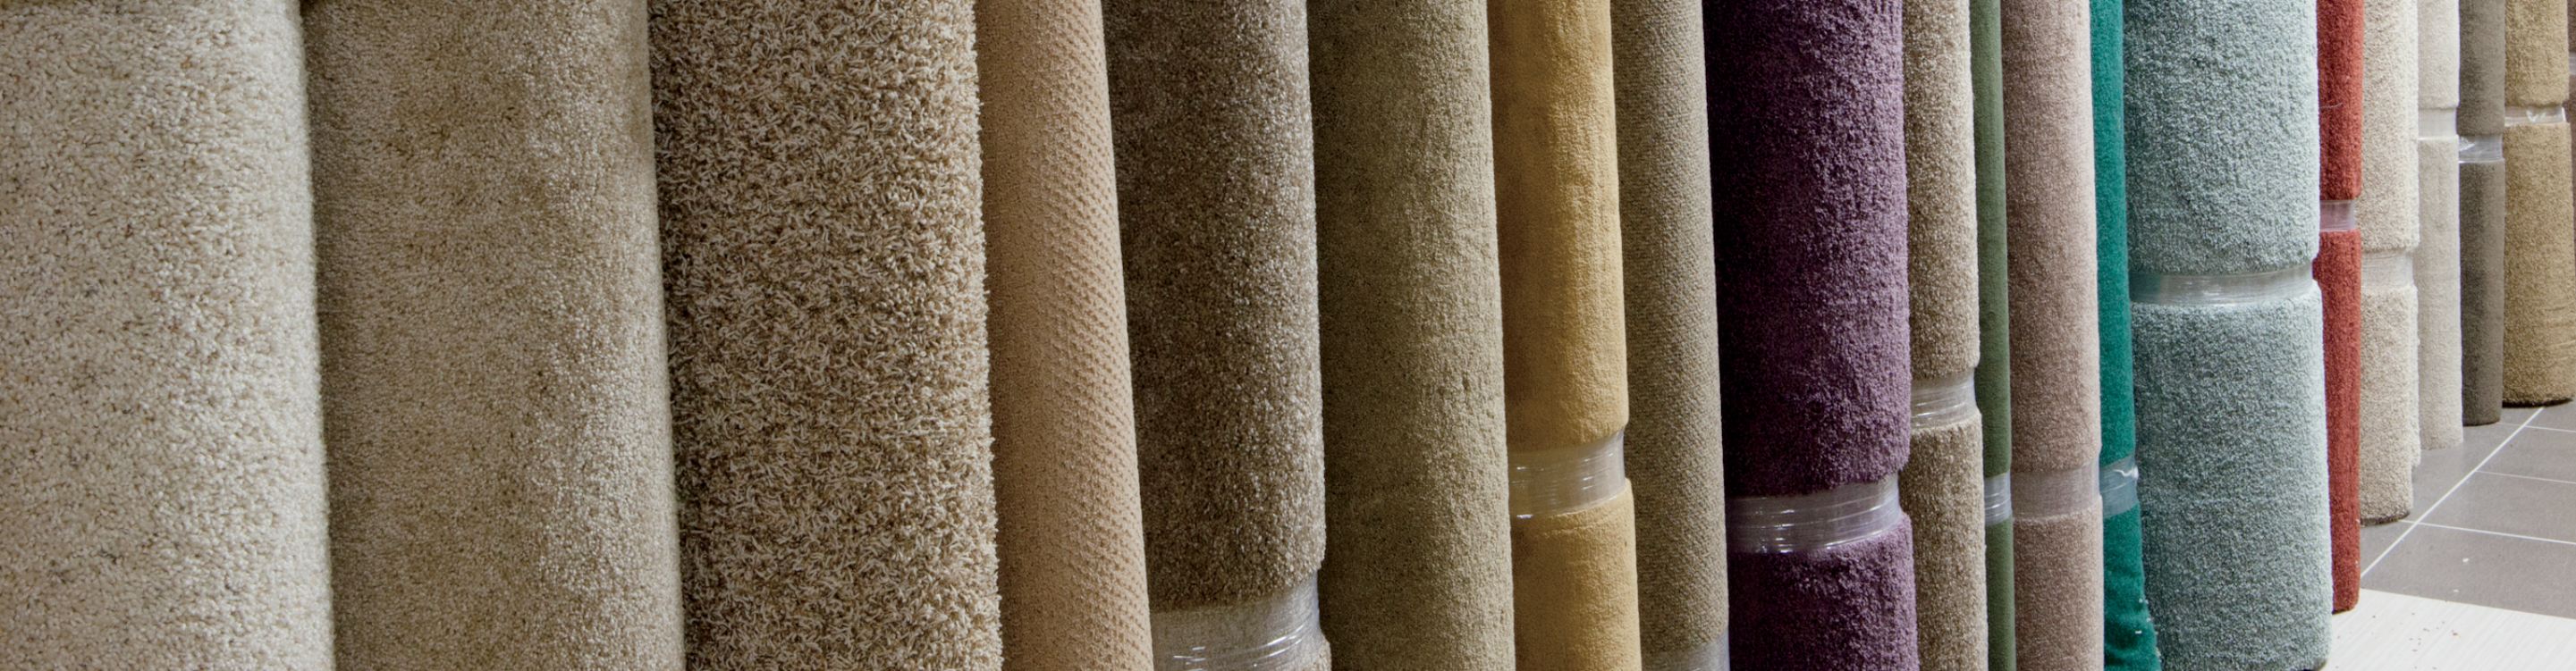 Colorful rolls of carpet remnants display